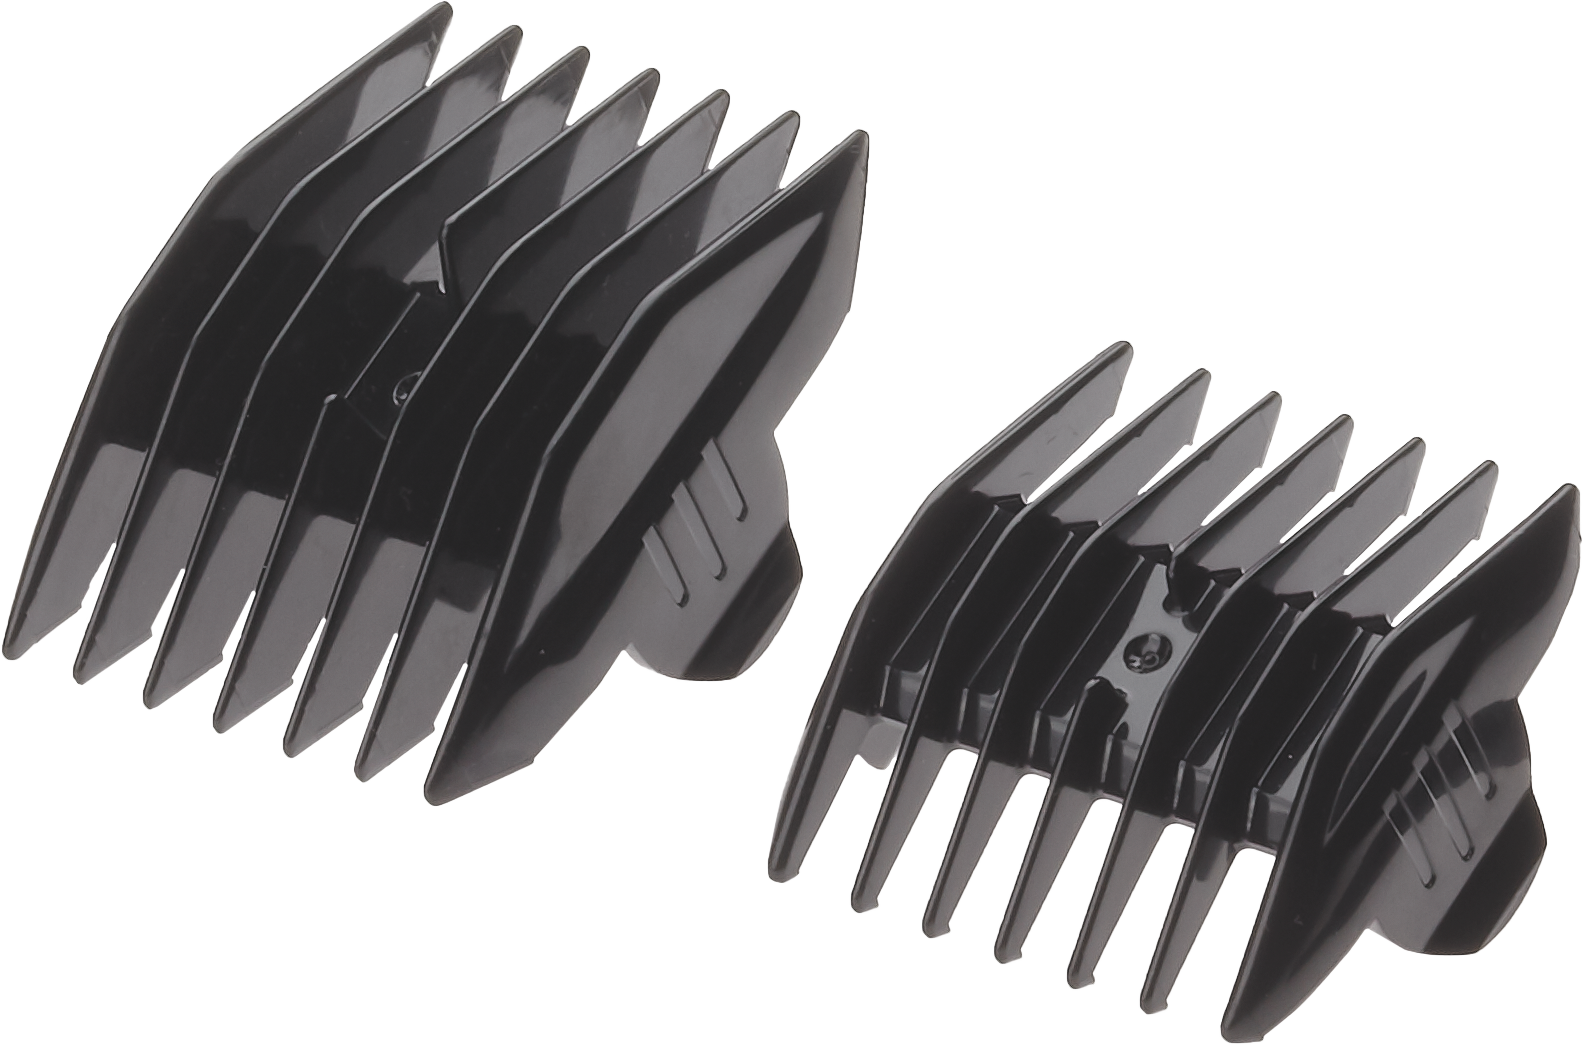 NXC pro Comb attachments for hair clipper